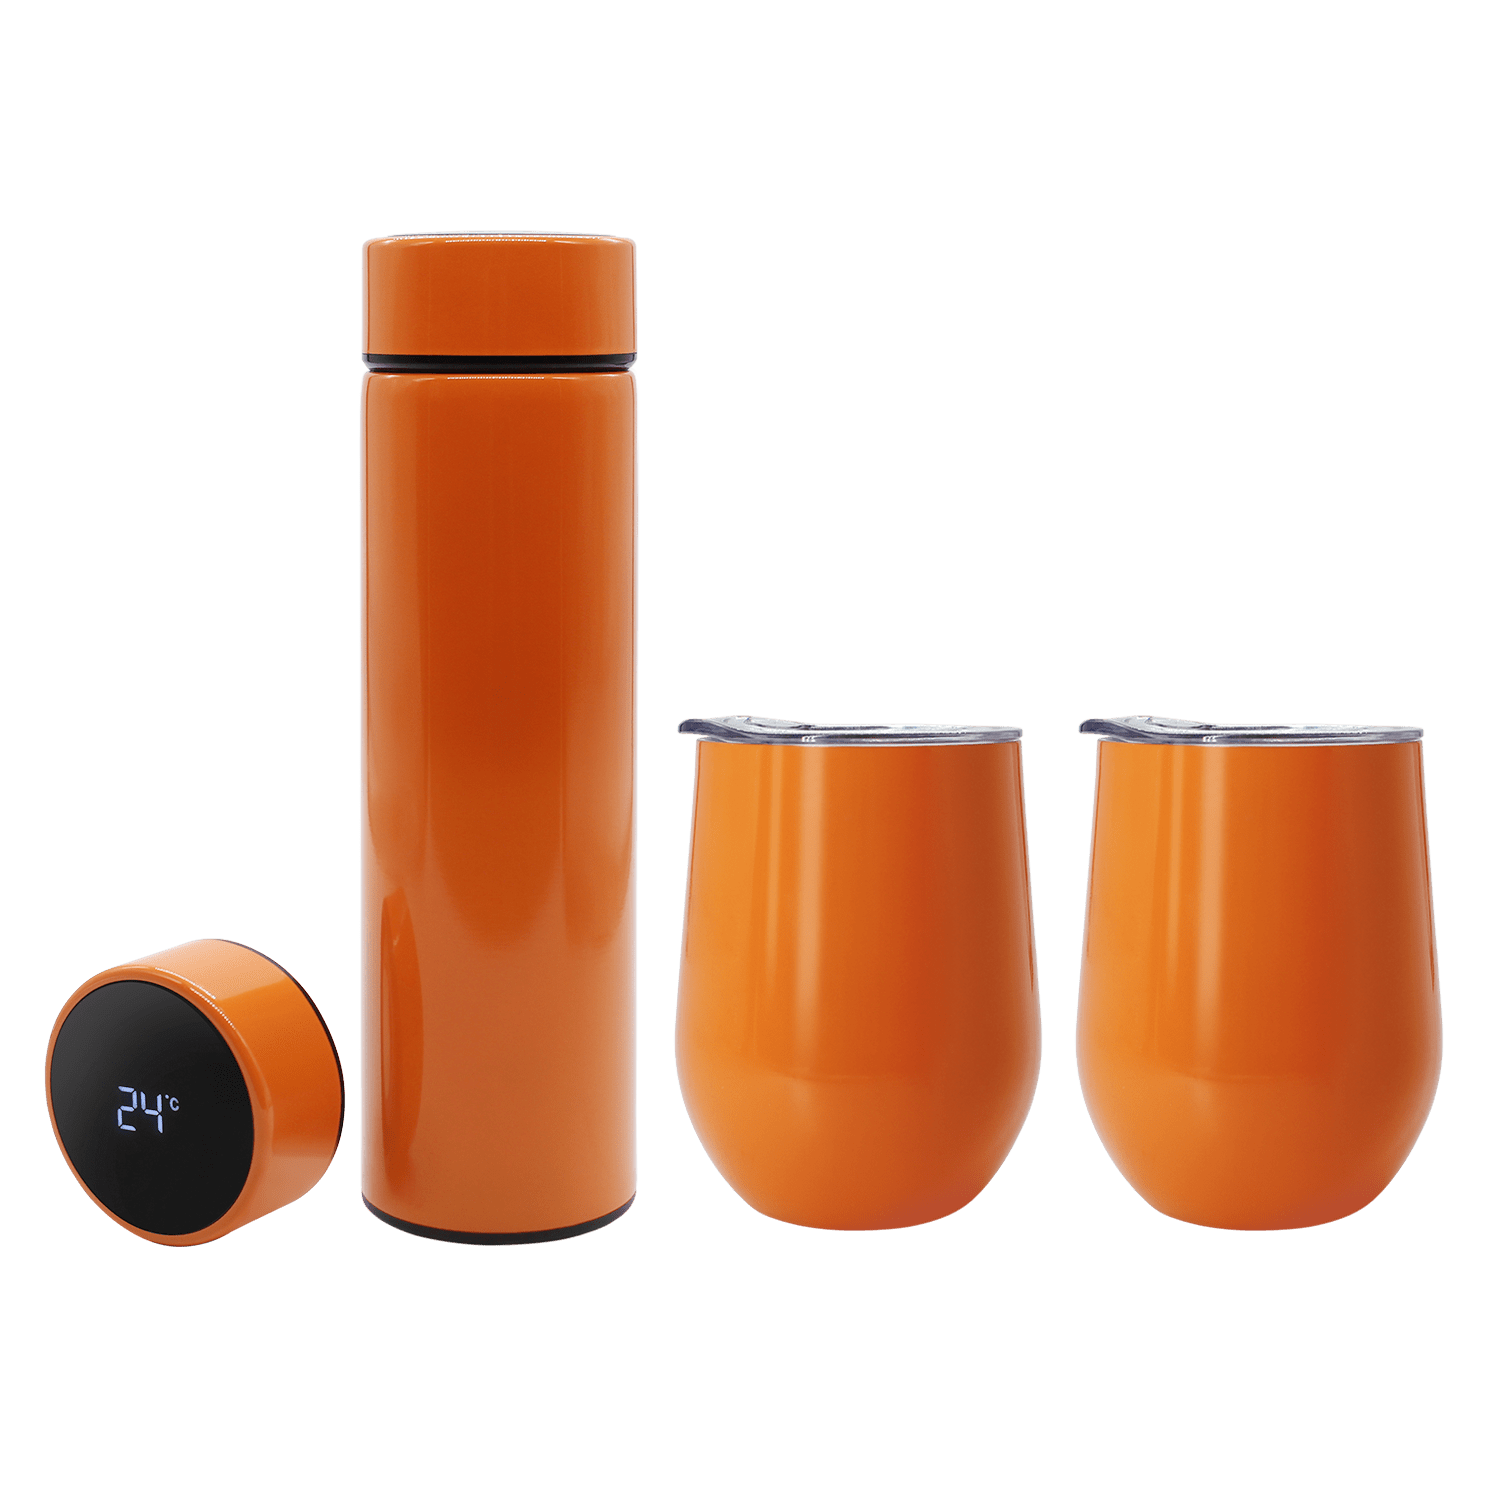 Набор Hot Box C2 B (оранжевый), оранжевый, металл, микрогофрокартон